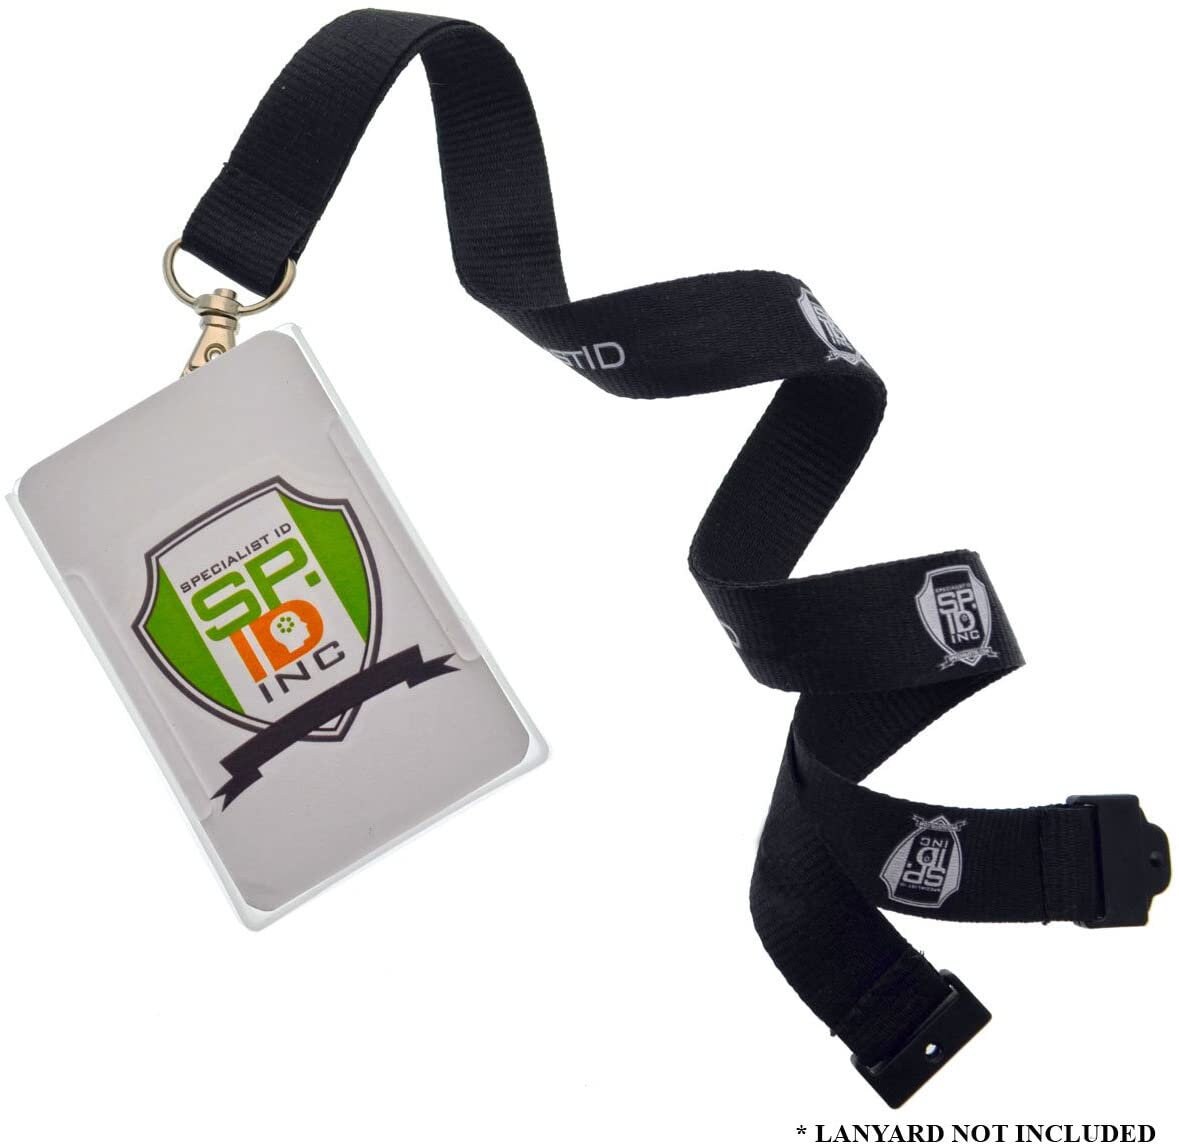 Porte-badge Multi ID Boîtier en plastique semi-rigide pour